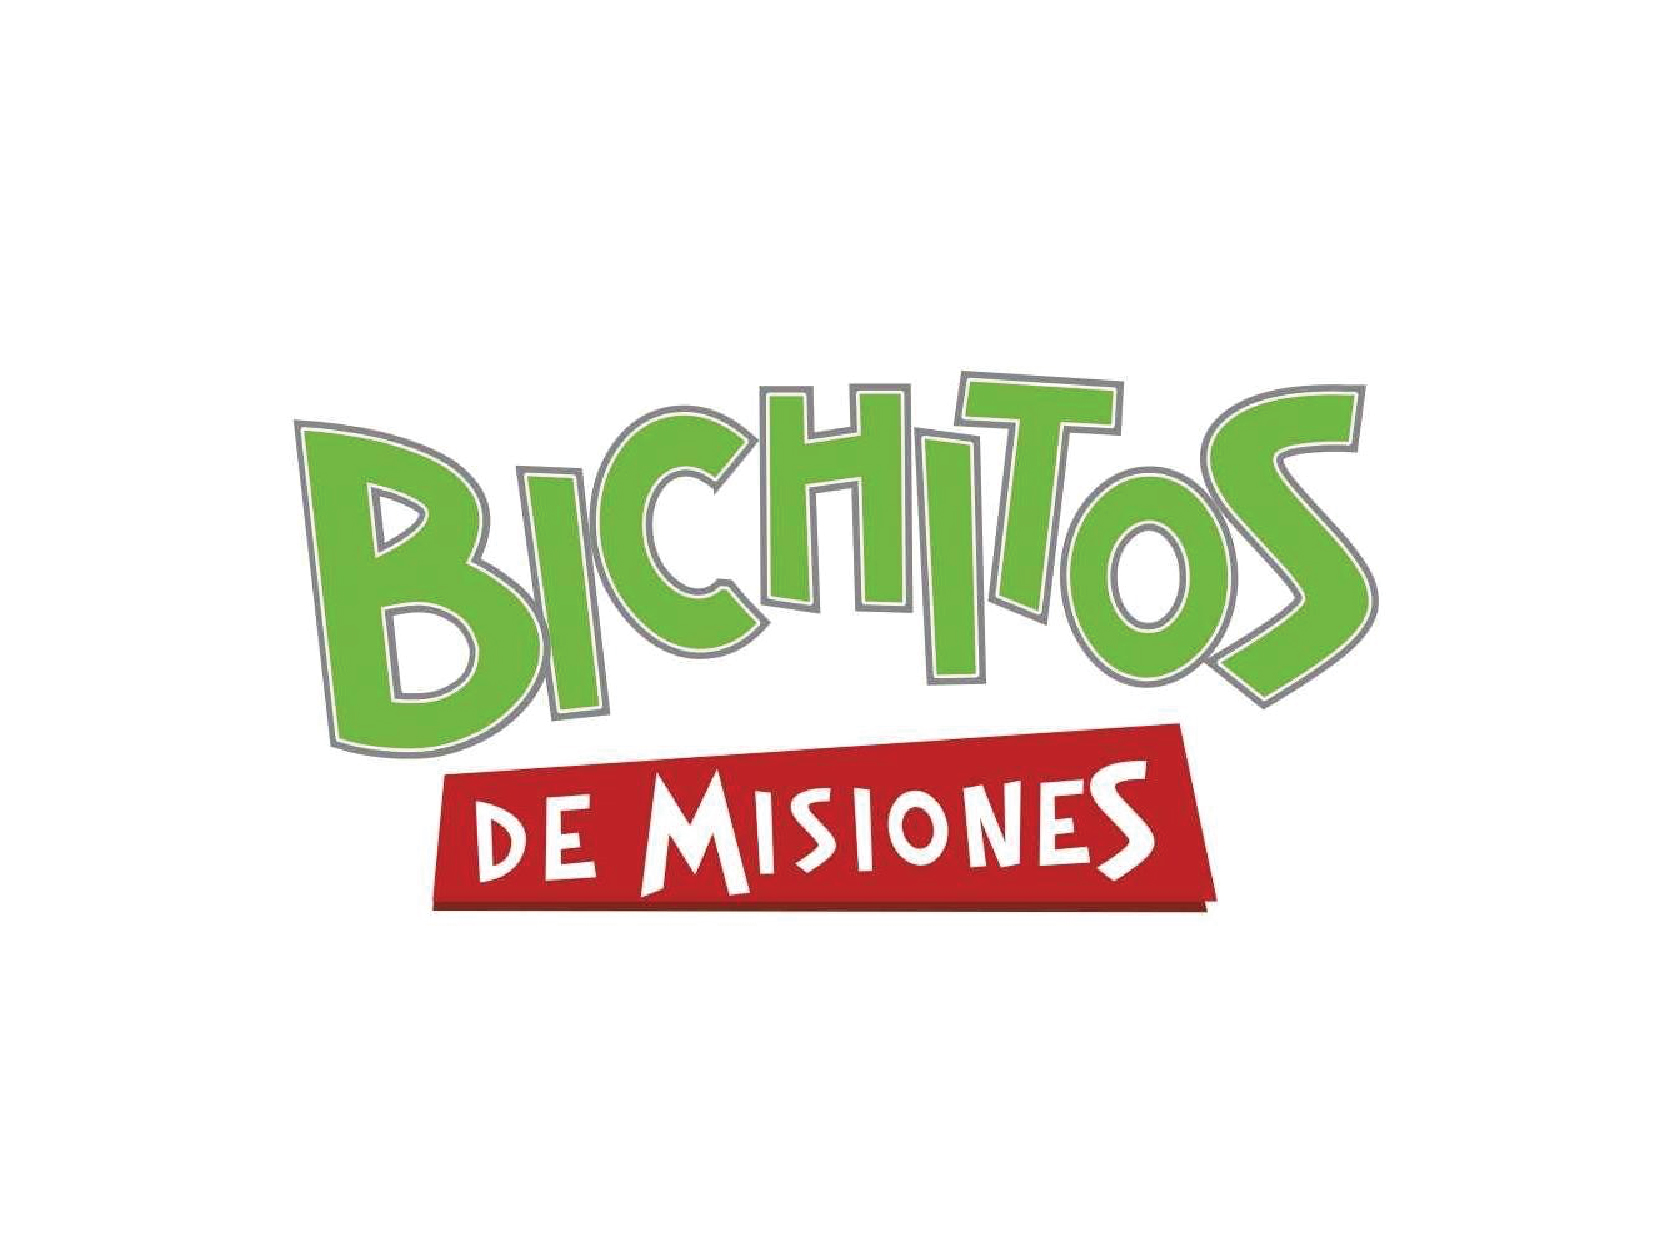 BICHITOS DE MISIONES